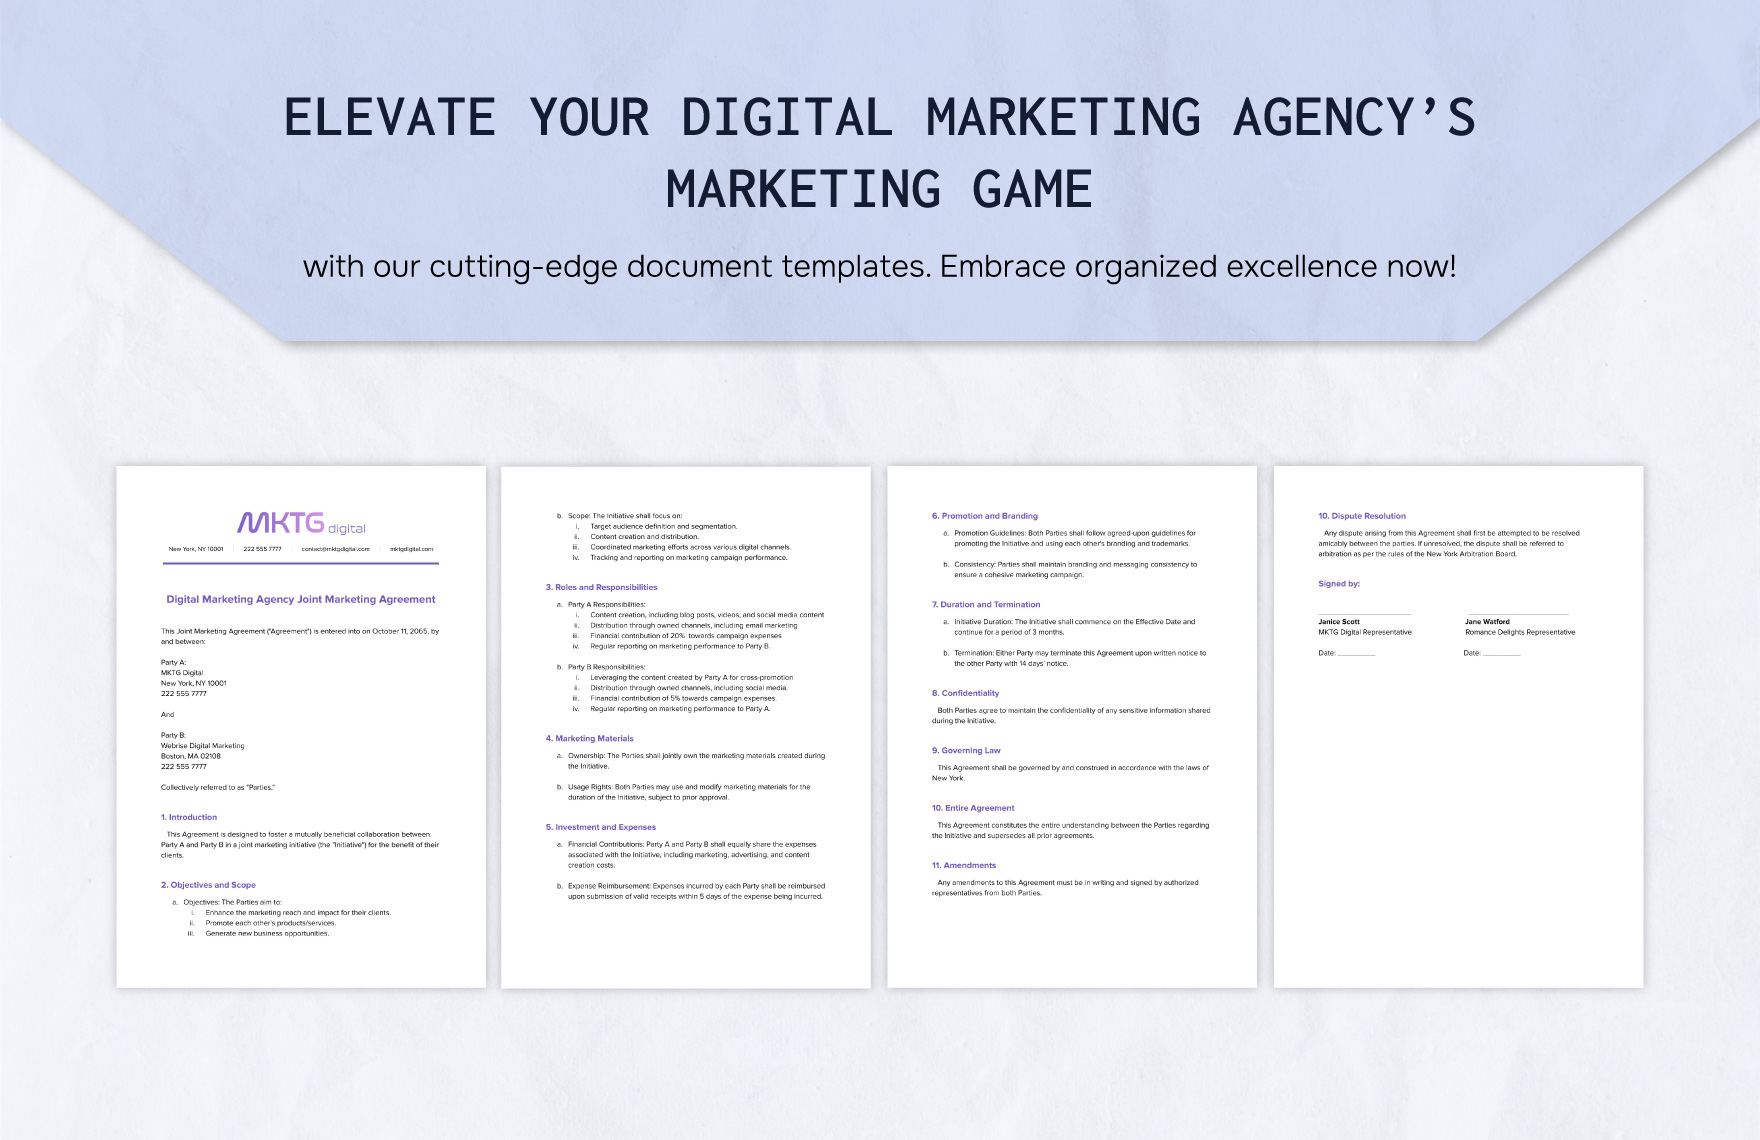 Digital Marketing Agency Joint Marketing Agreement Template